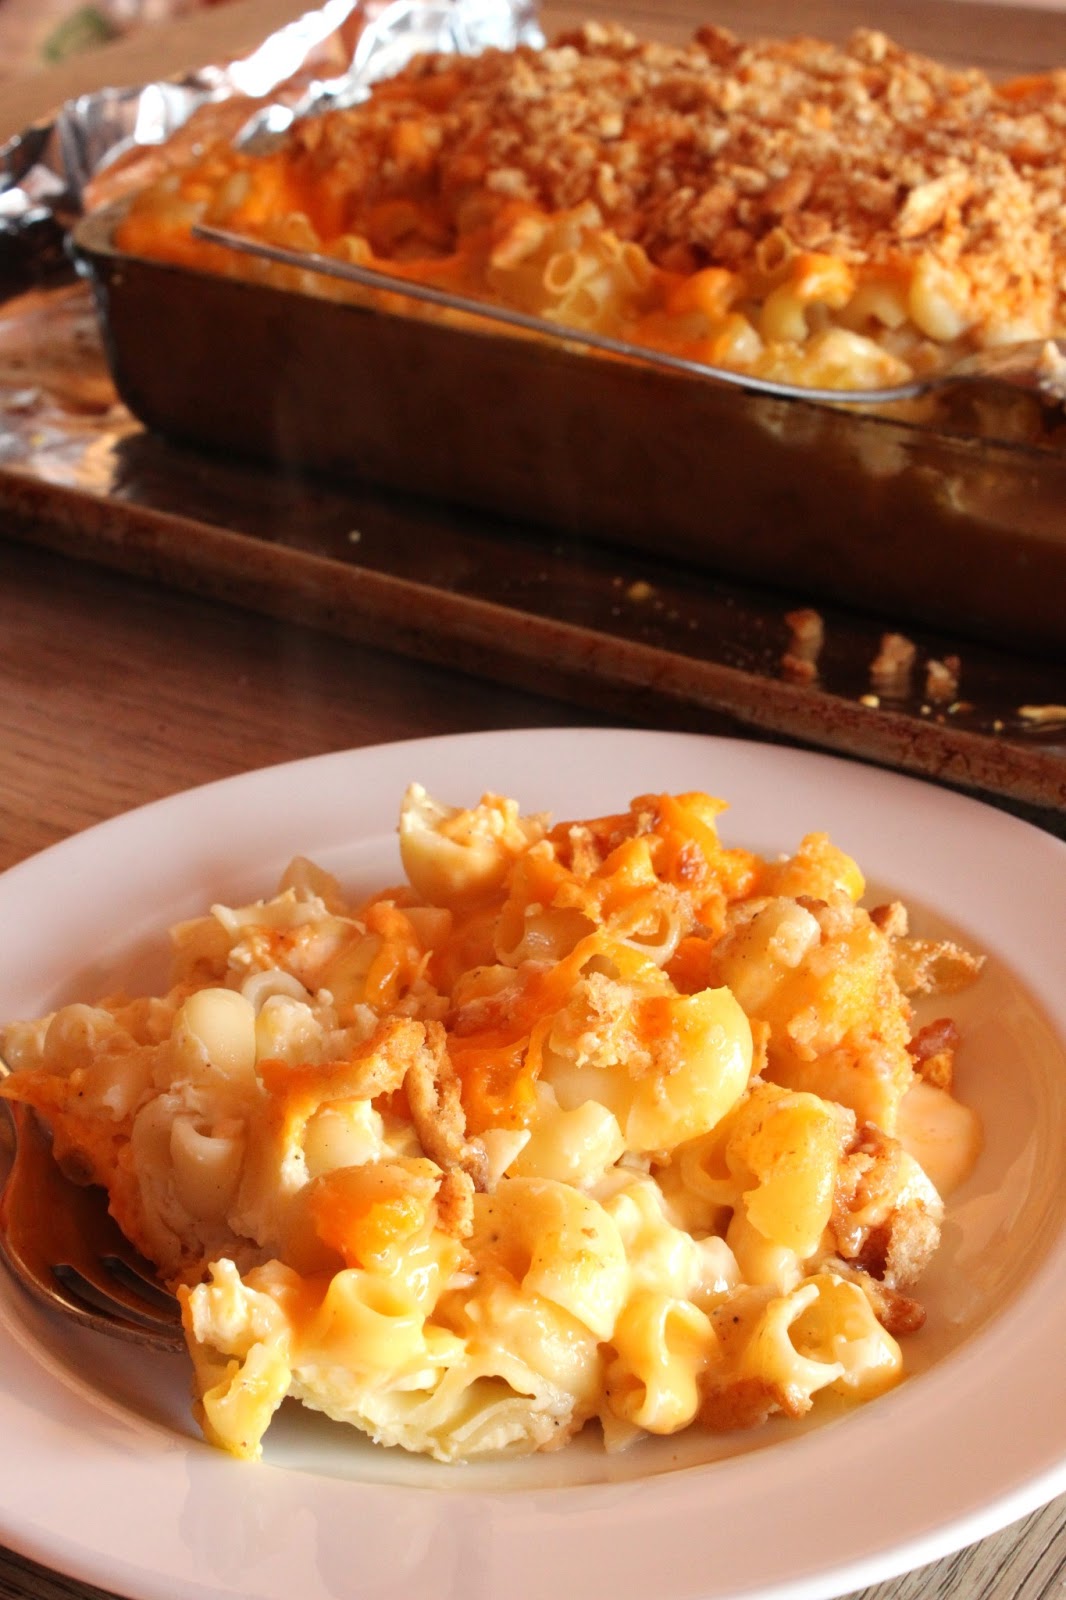 SmallBizLady Melinda Emerson's classic macaroni and cheese